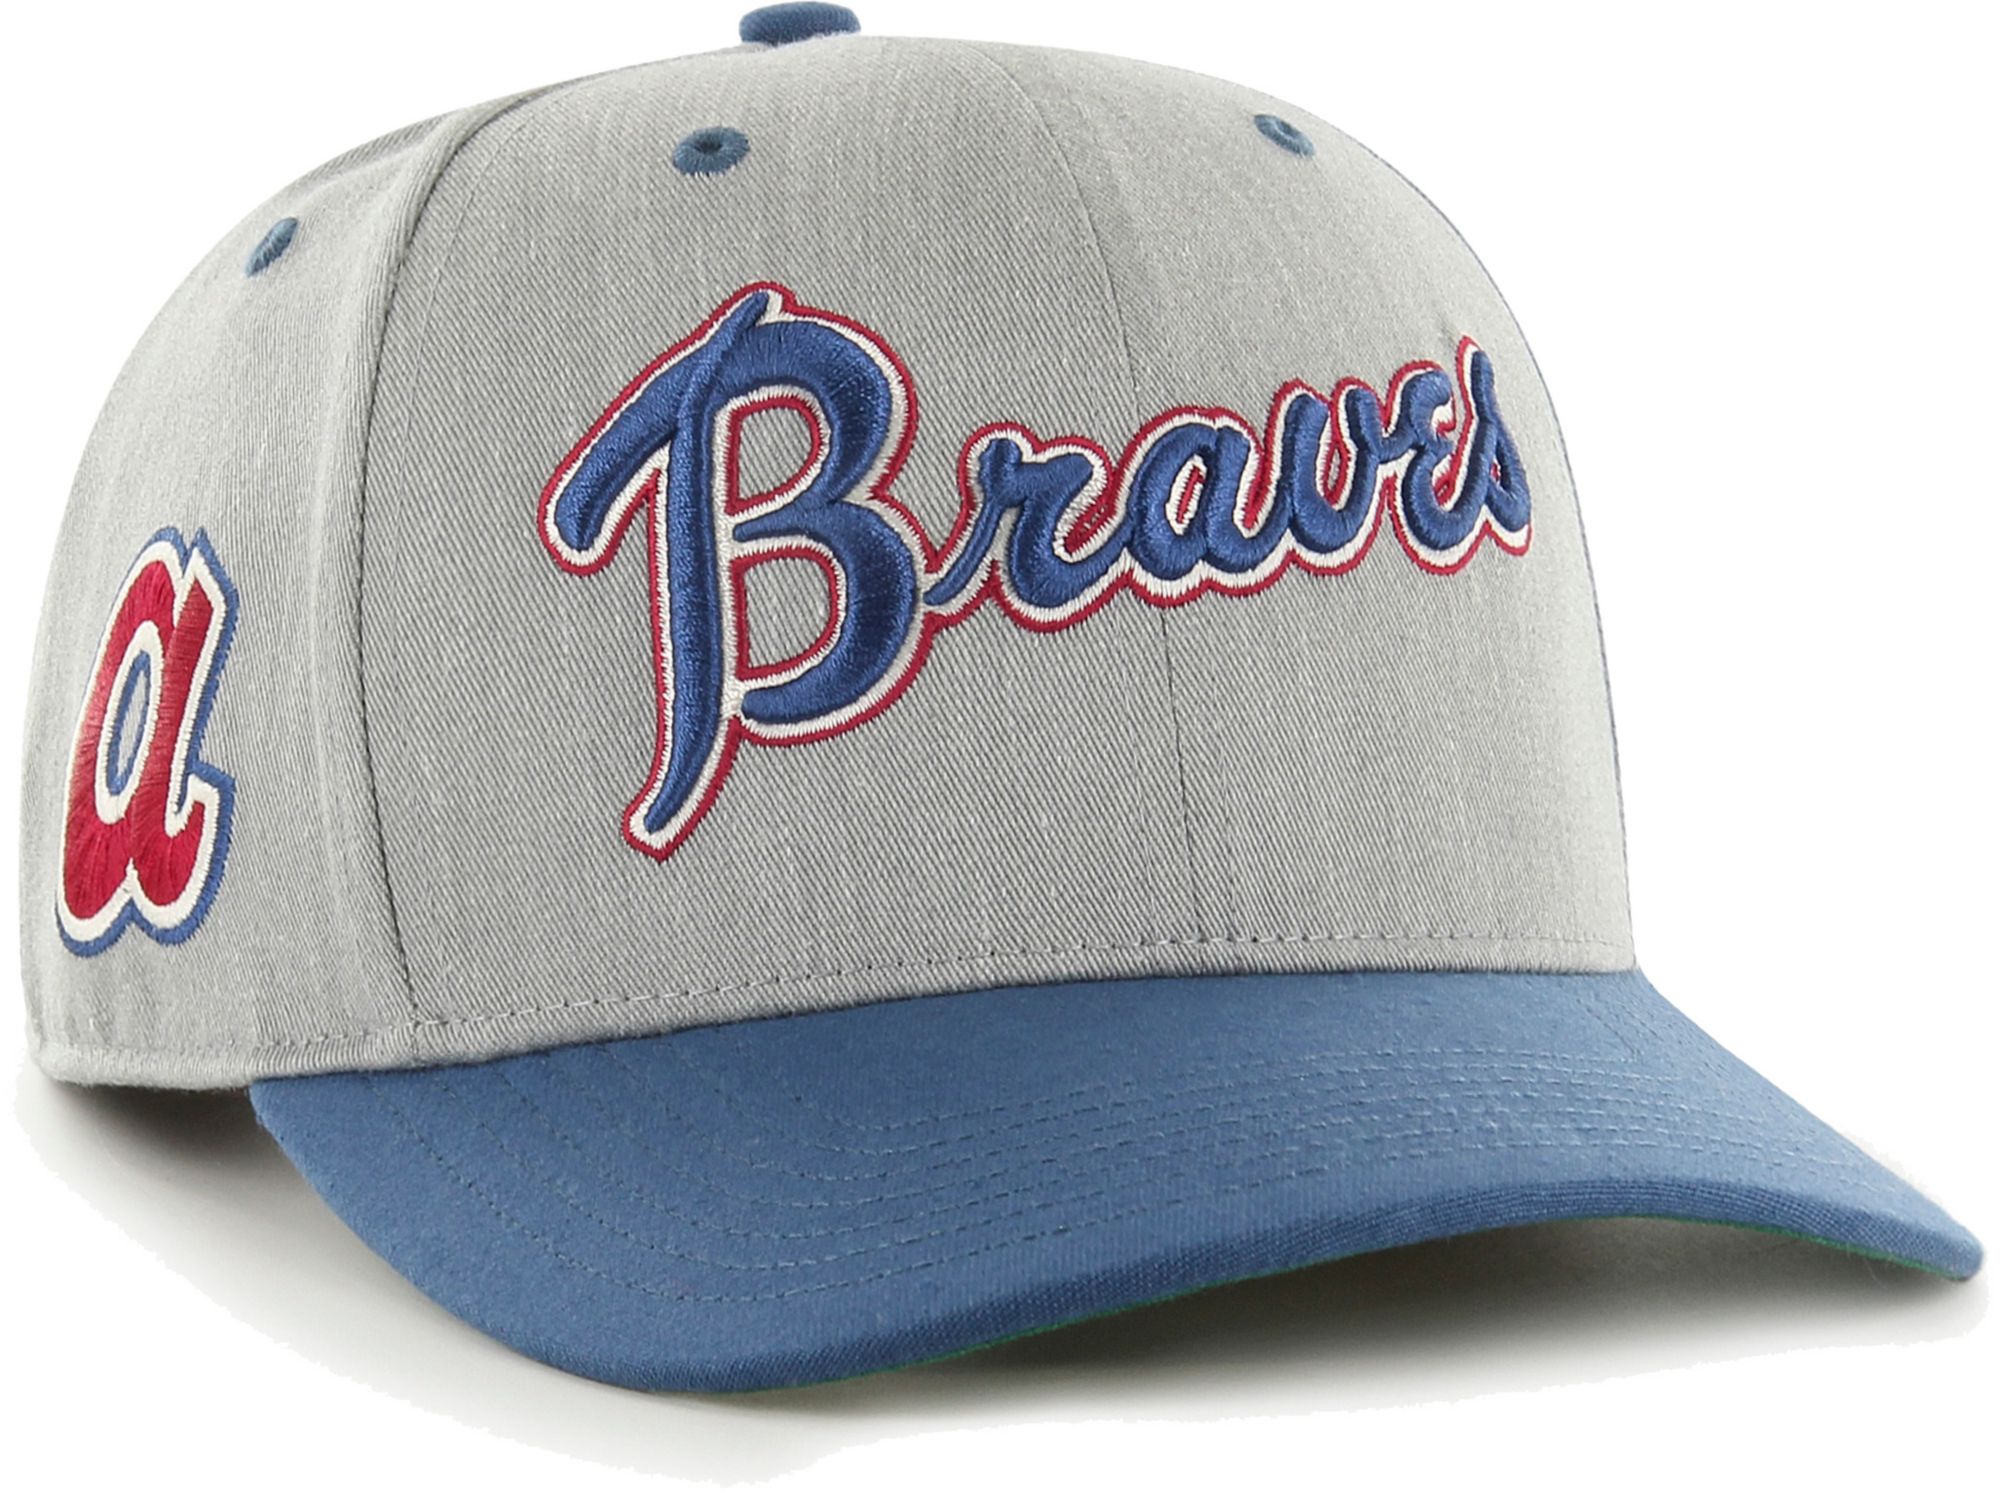  Atlanta Braves Dark Gray Clean Up Adjustable Hat